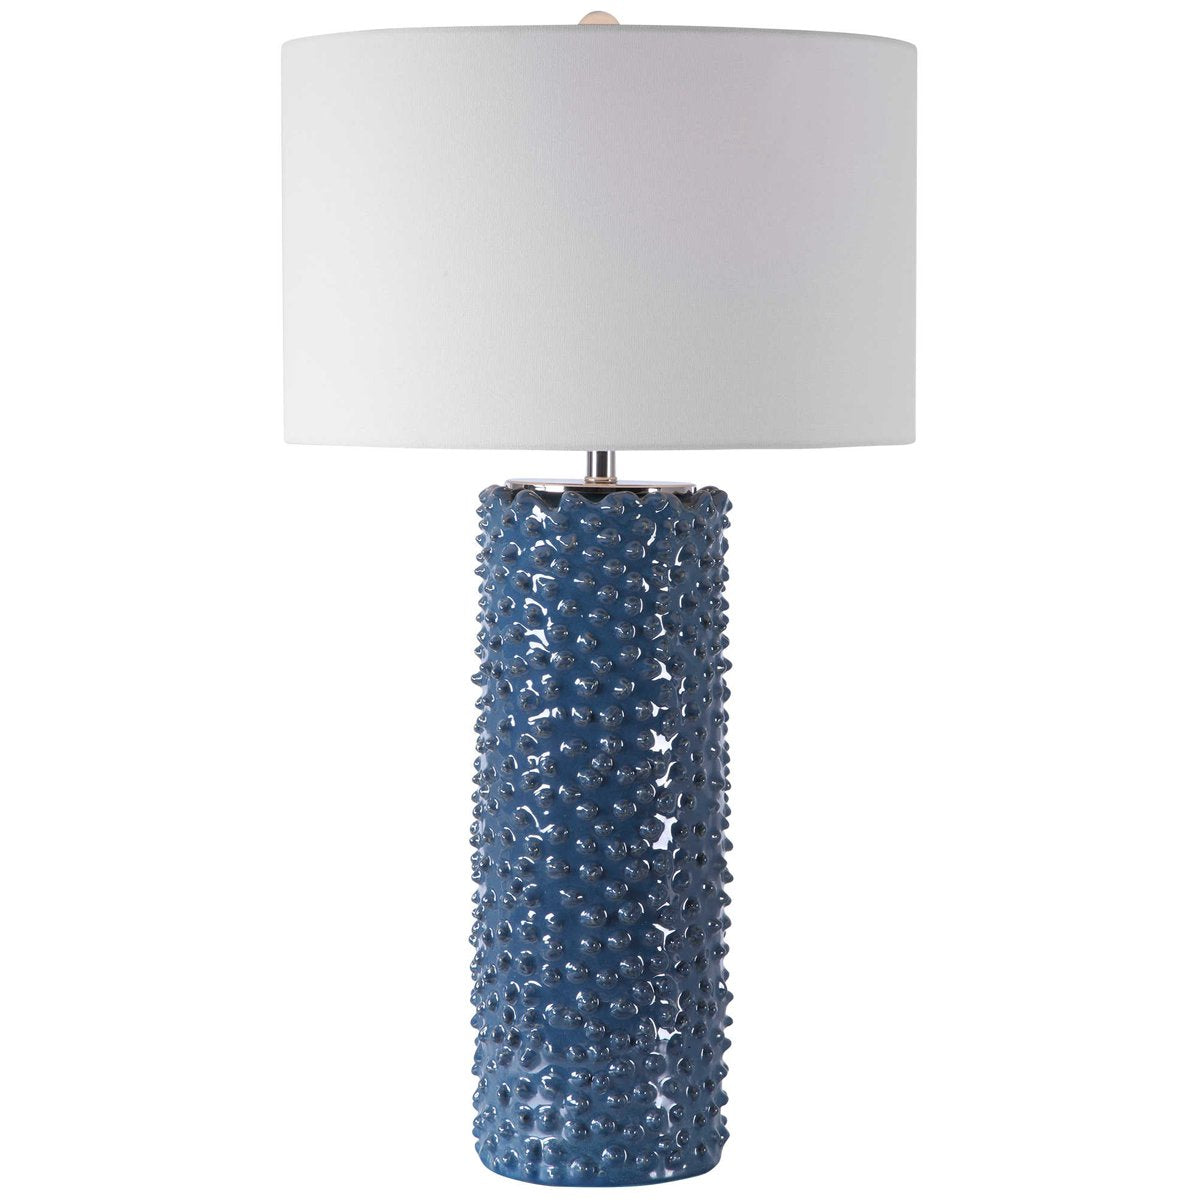 Uttermost Ciji Blue Table Lamp